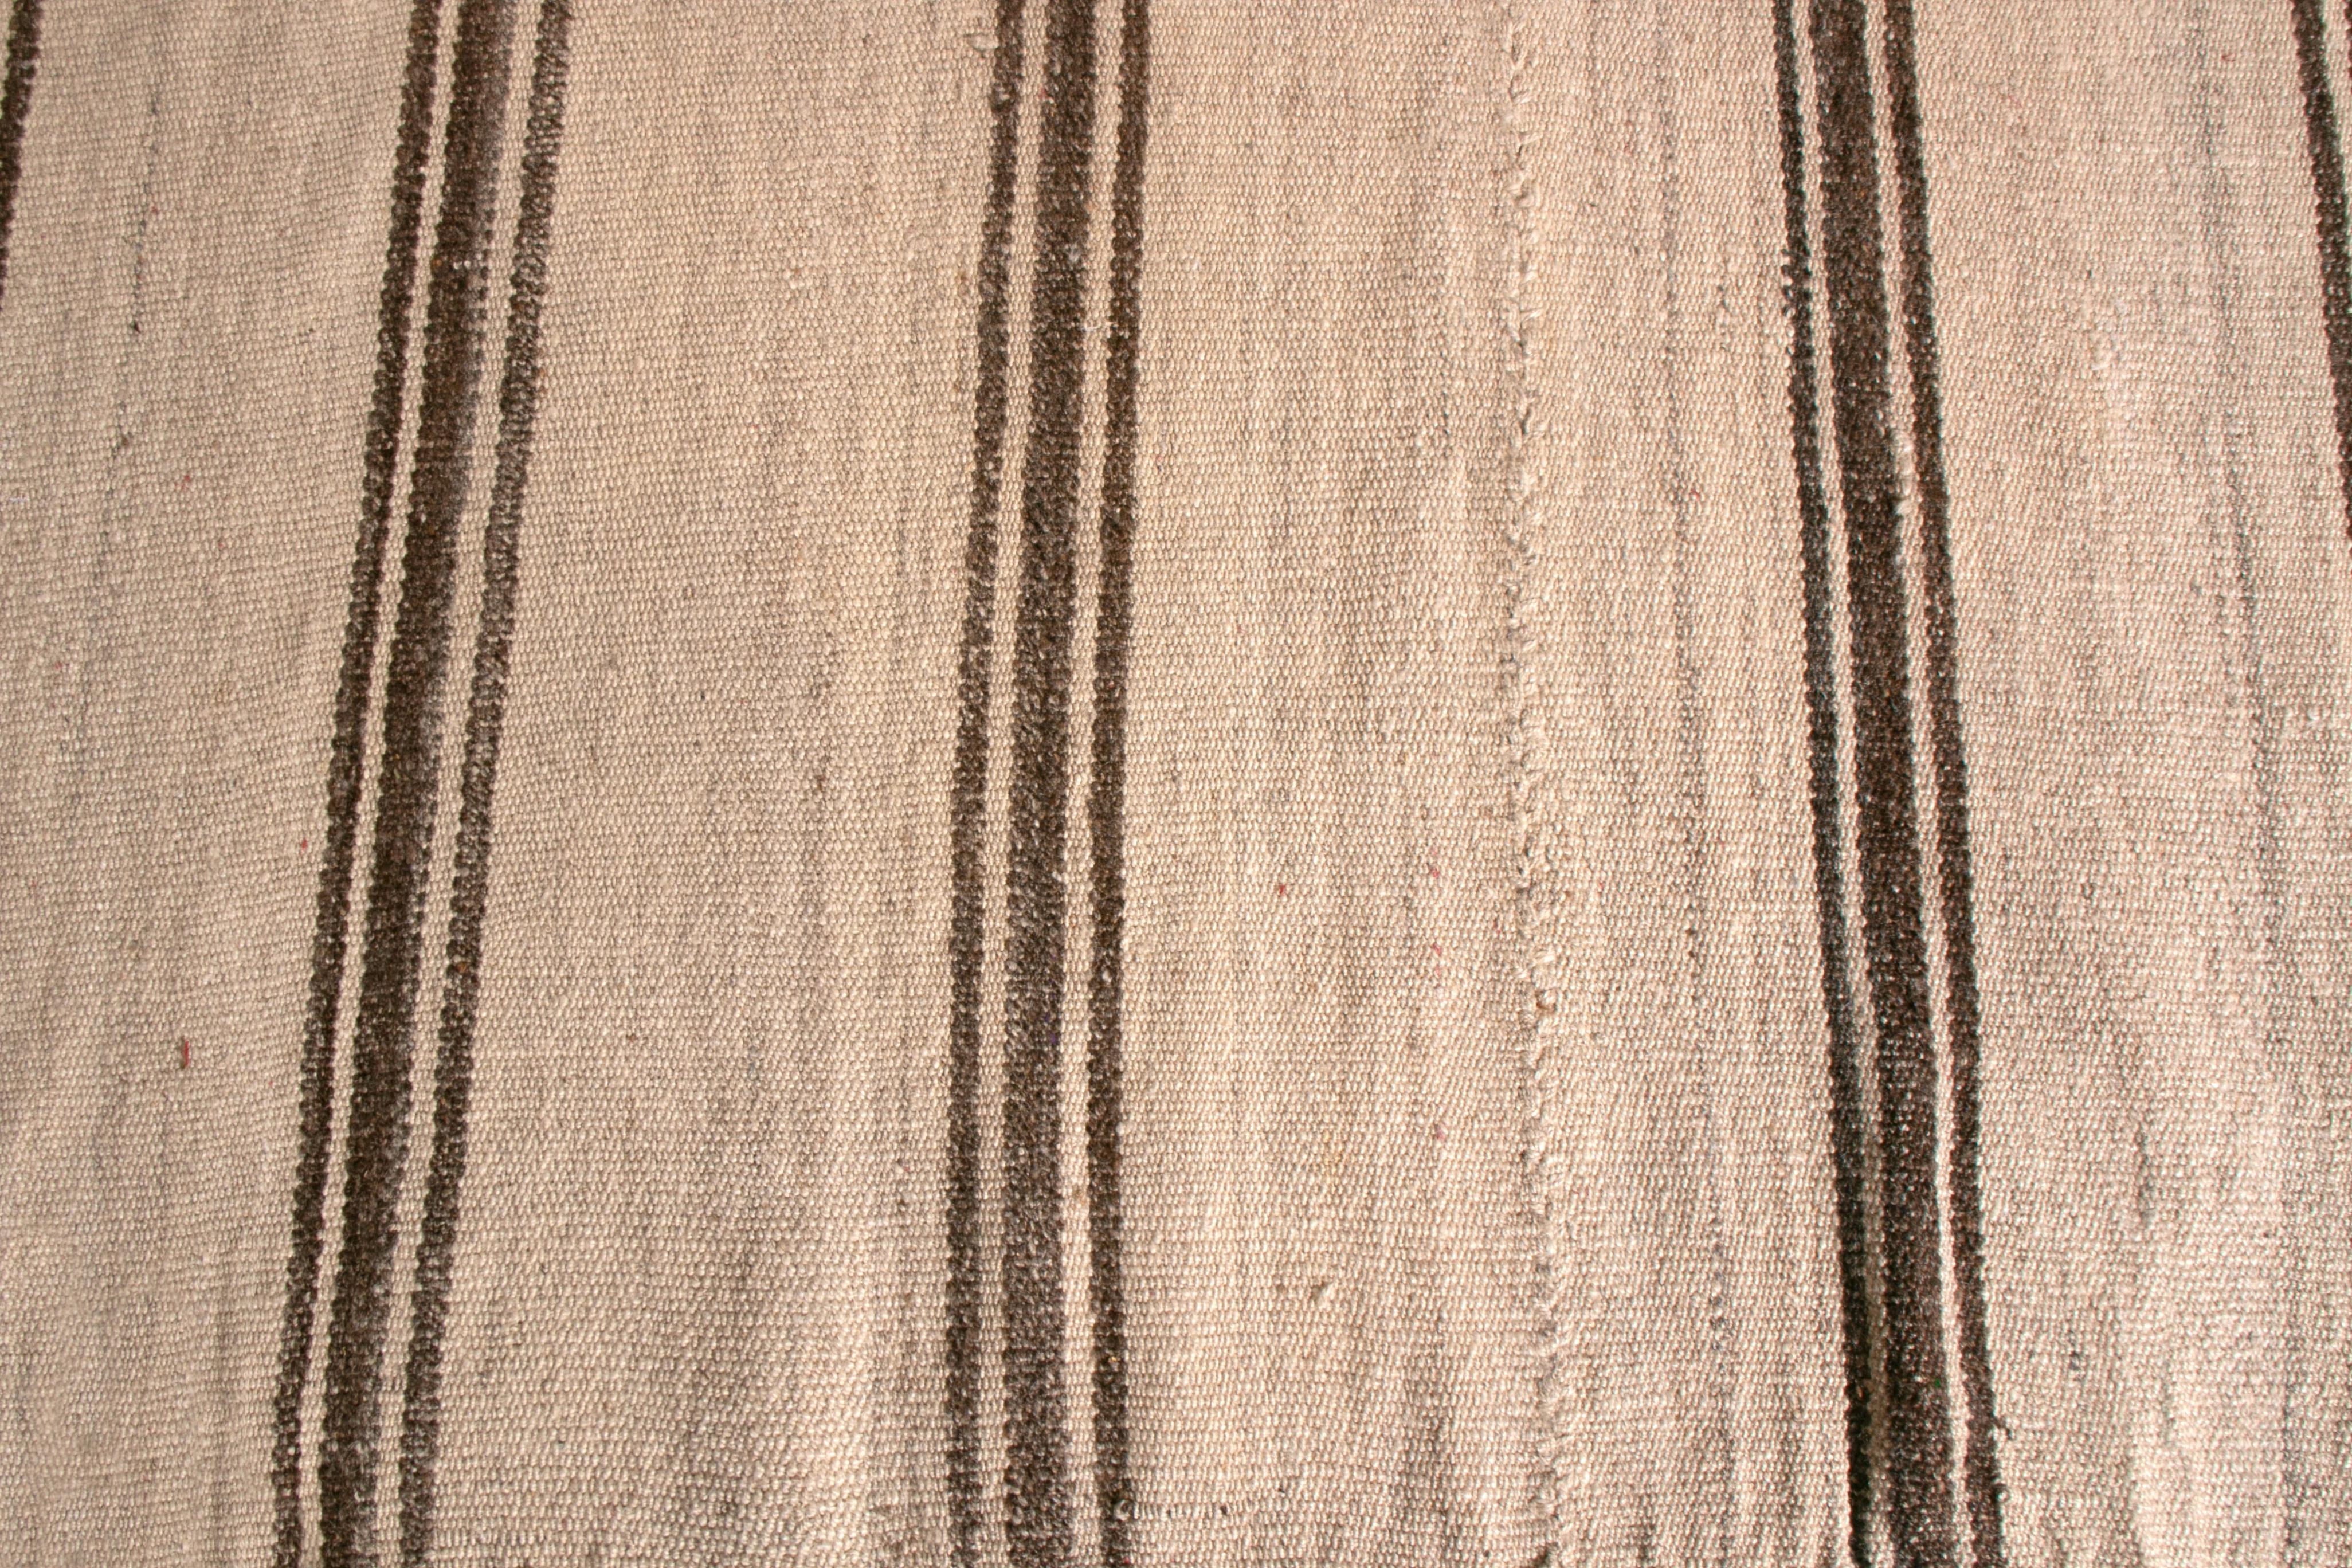 Mid-20th Century 1950s Midcentury Persian Kilim Beige Brown Striped Vintage Flat-Weave